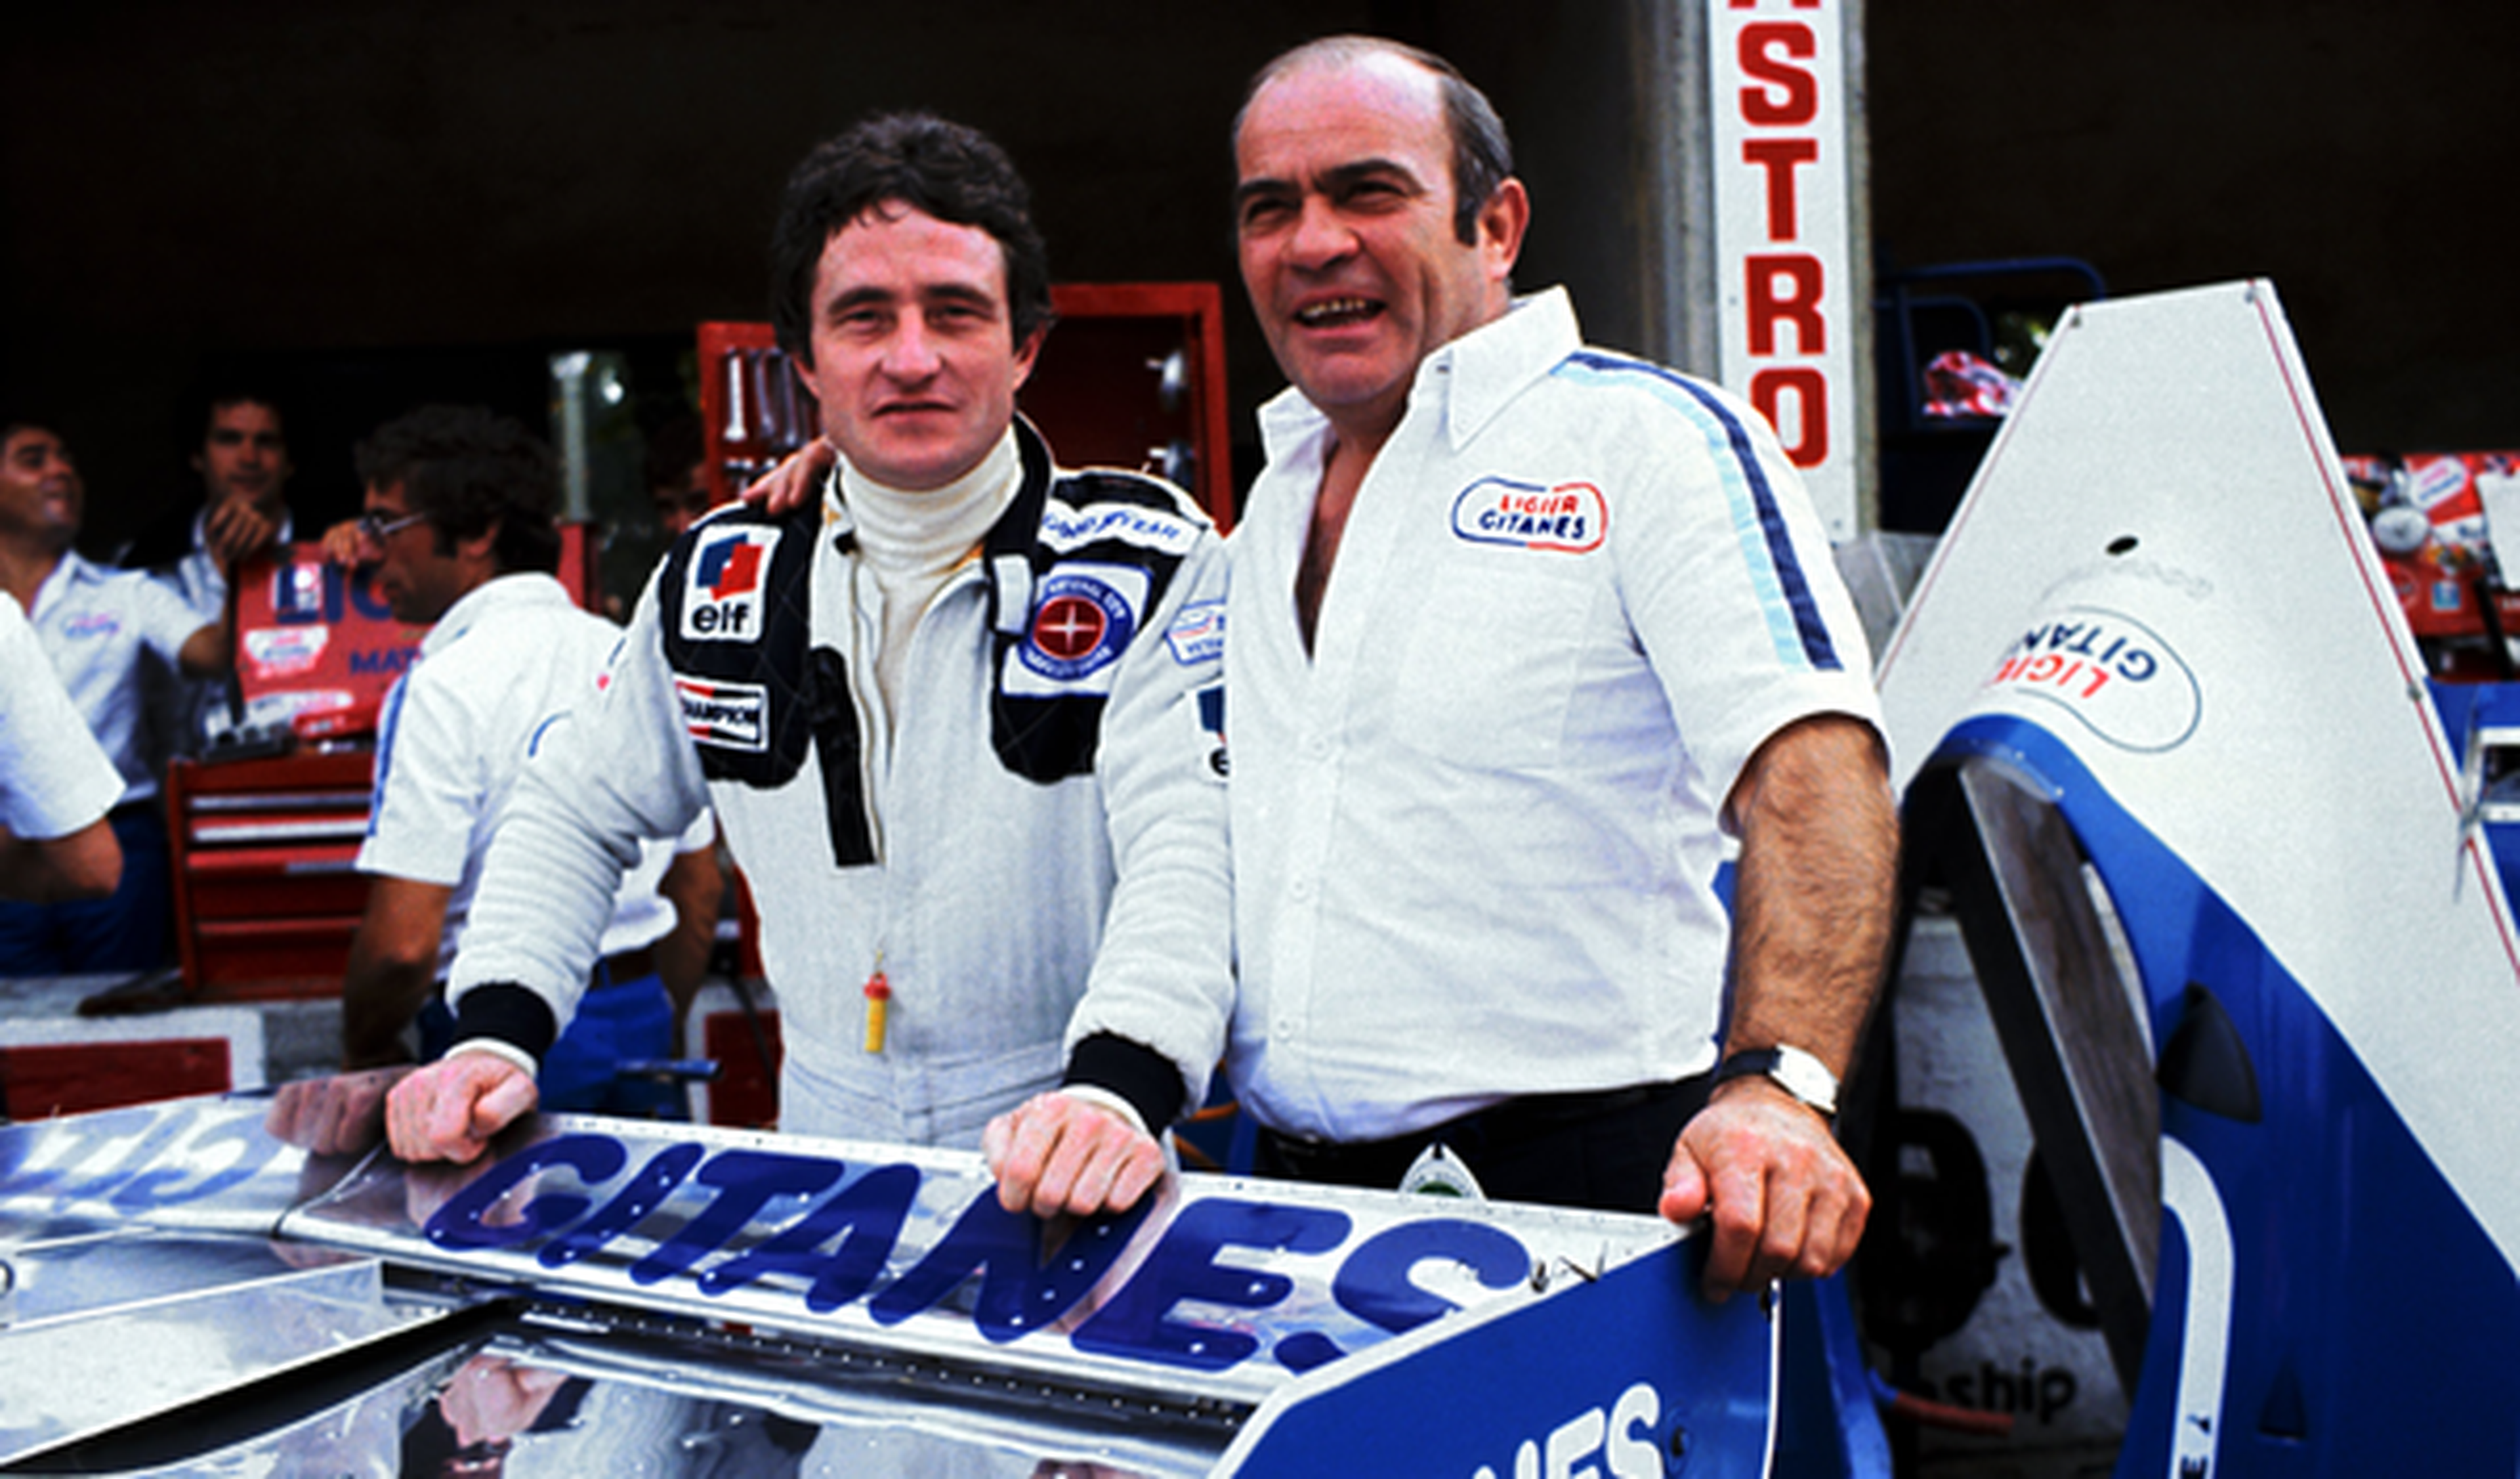 Fallece Guy Ligier, dueño del histórico equipo Ligier F1